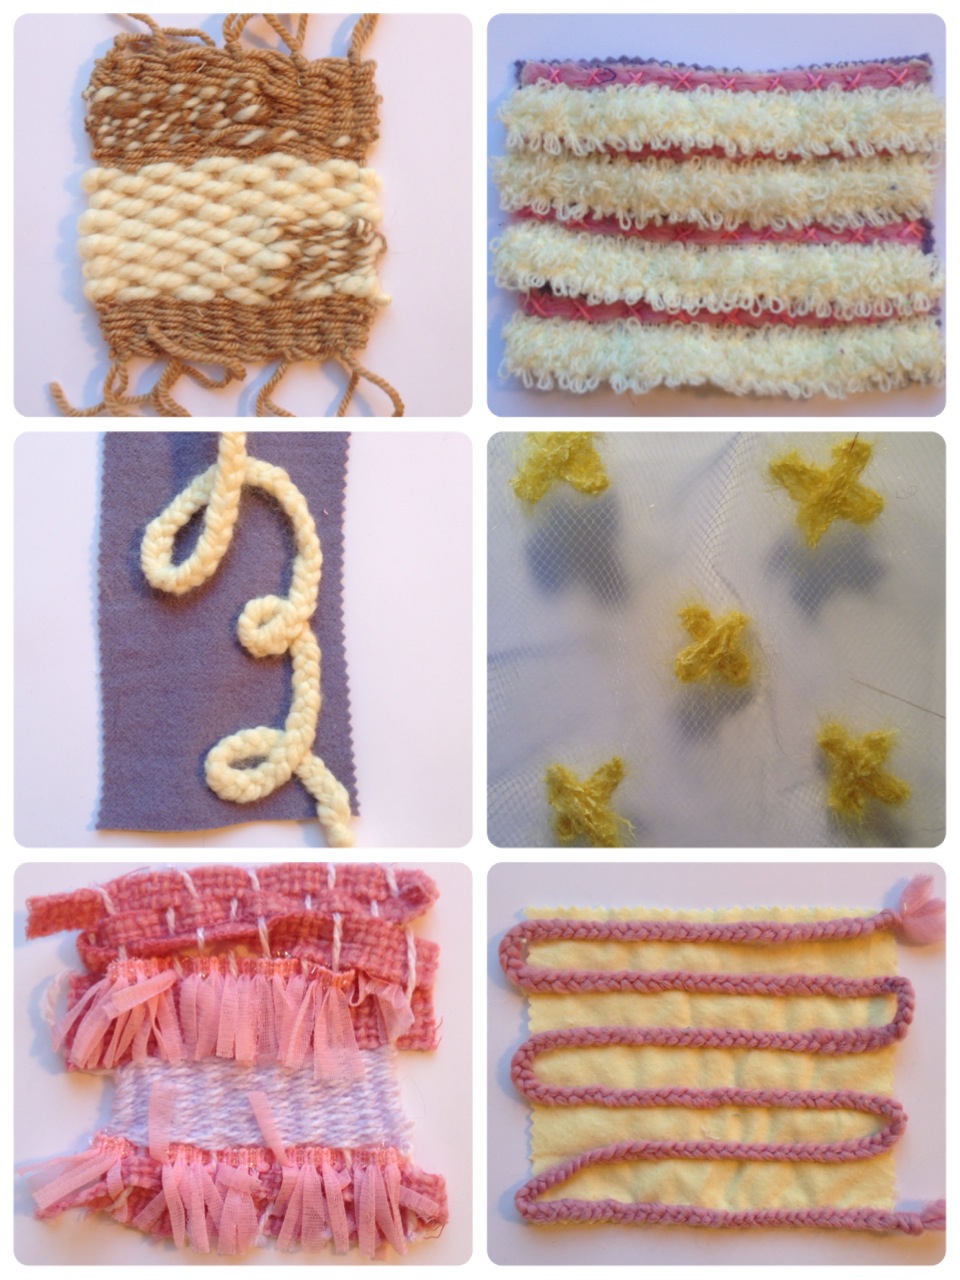 fabric manipulation yarn felting weaving texture color